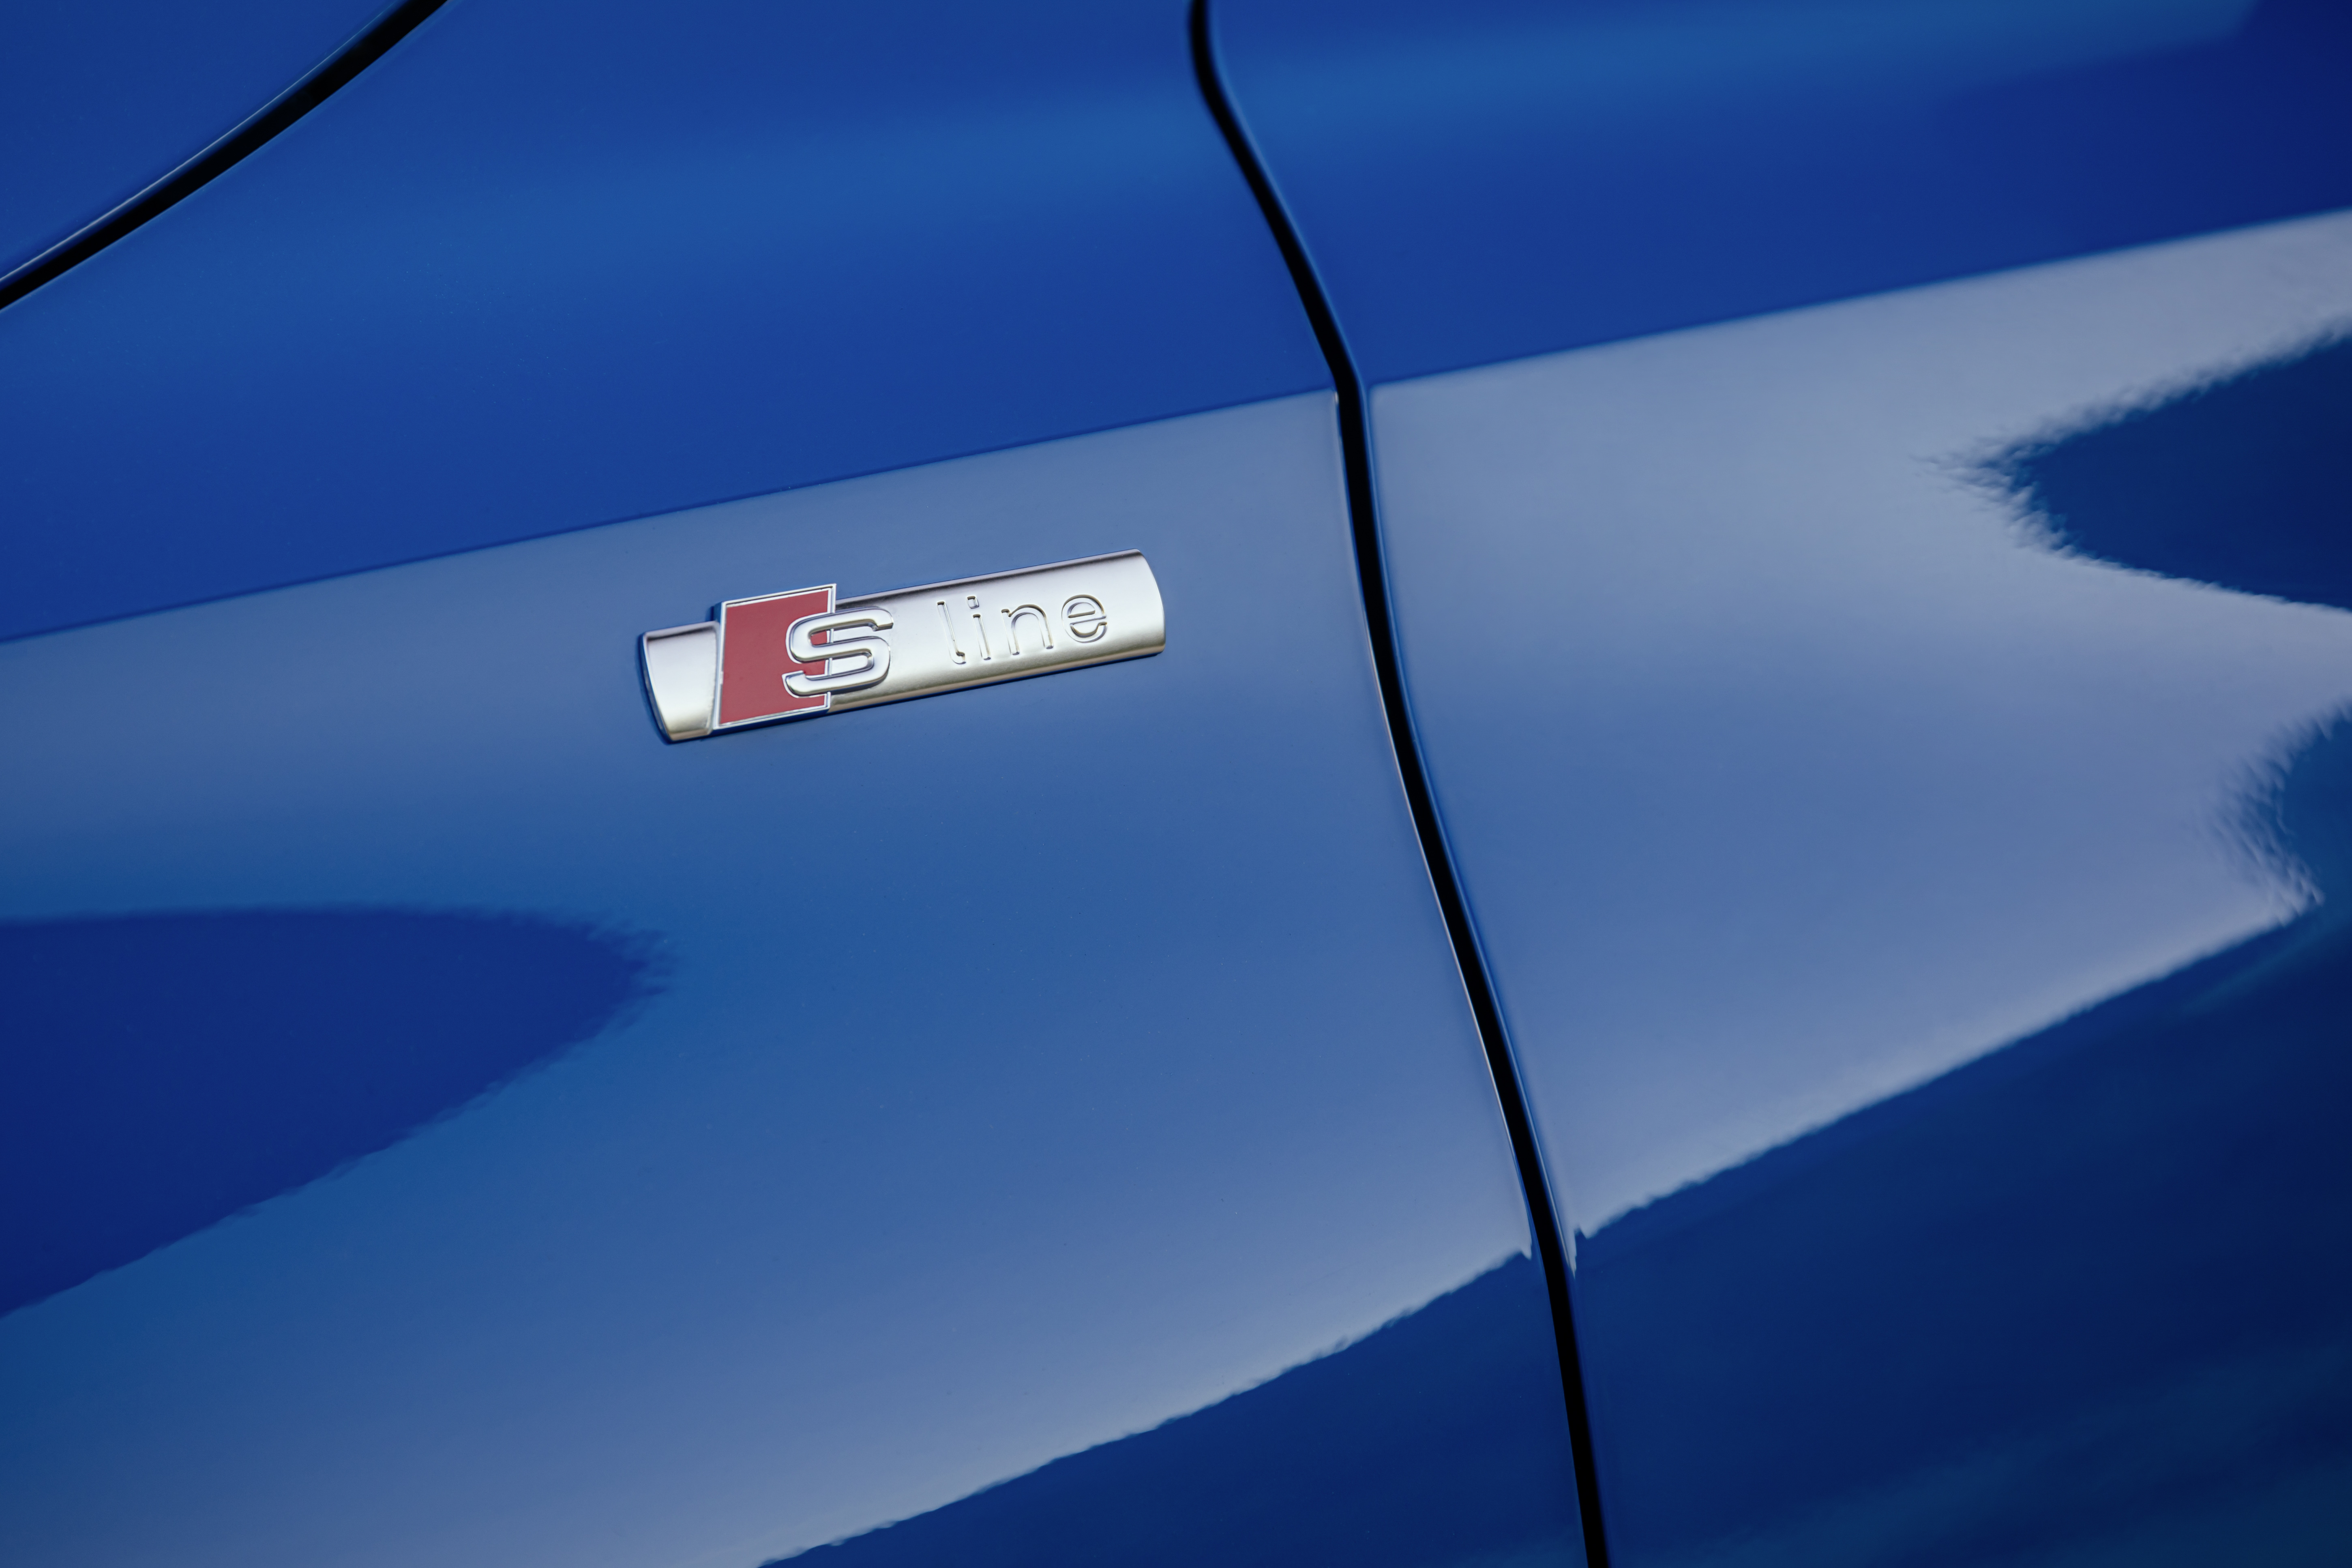 Audi A3 S-Line badge detail